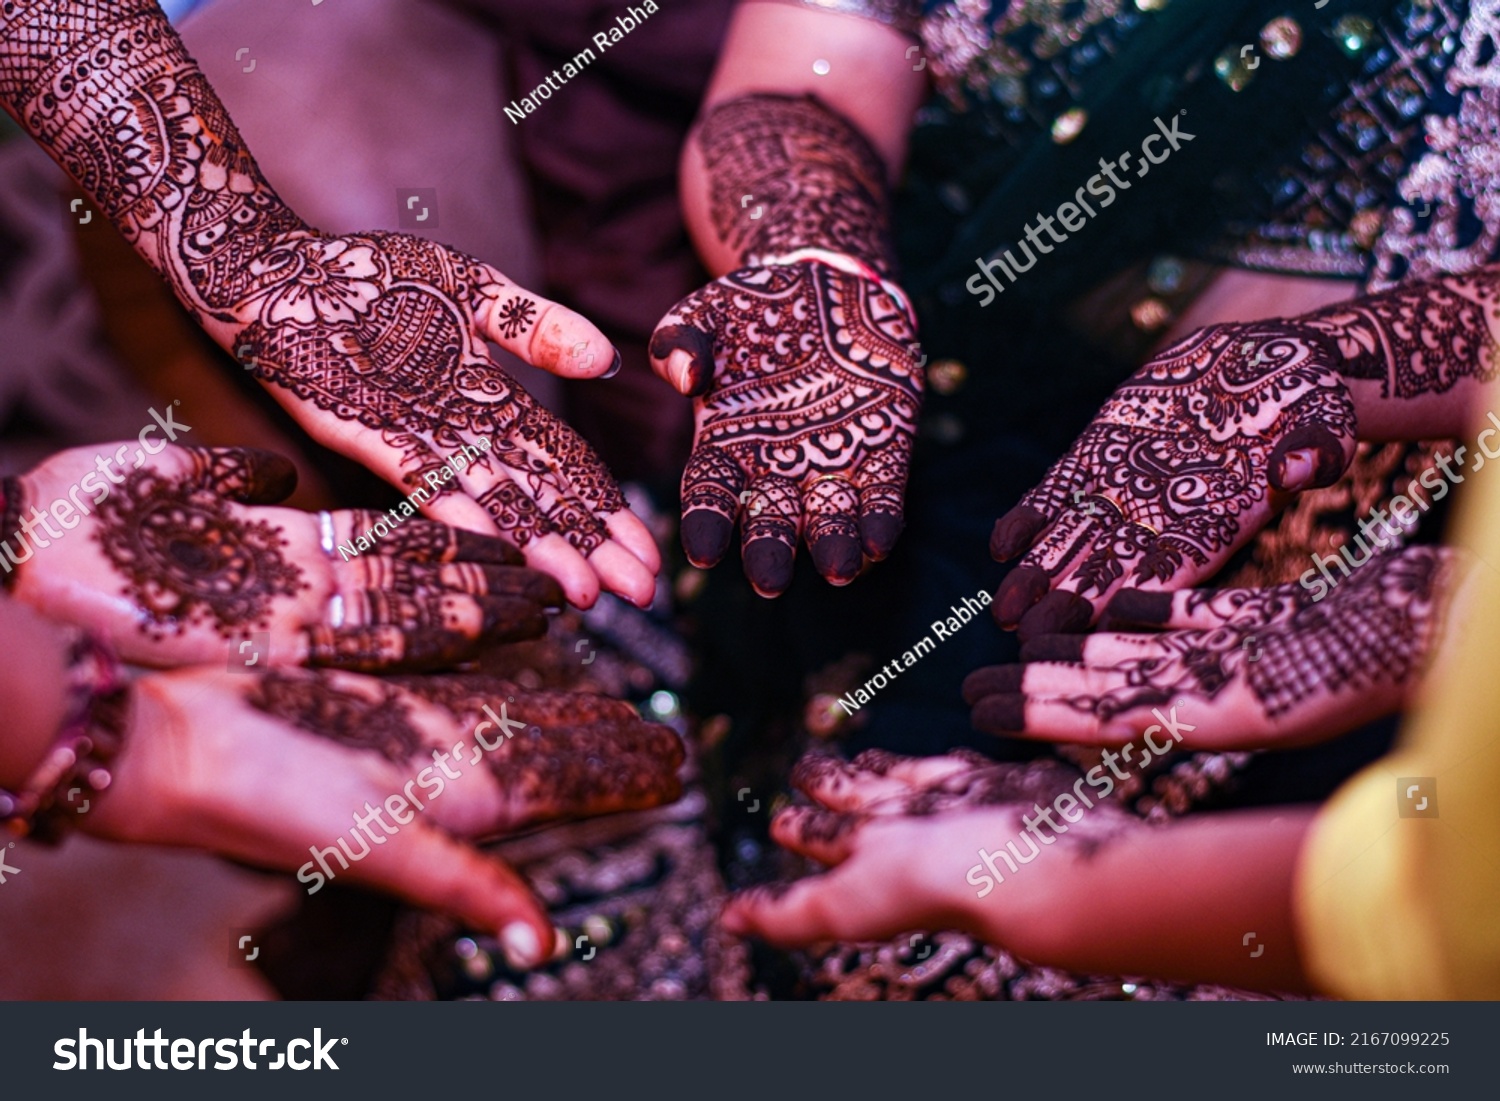 98 Mehendi invitation Stock Photos, Images & Photography | Shutterstock